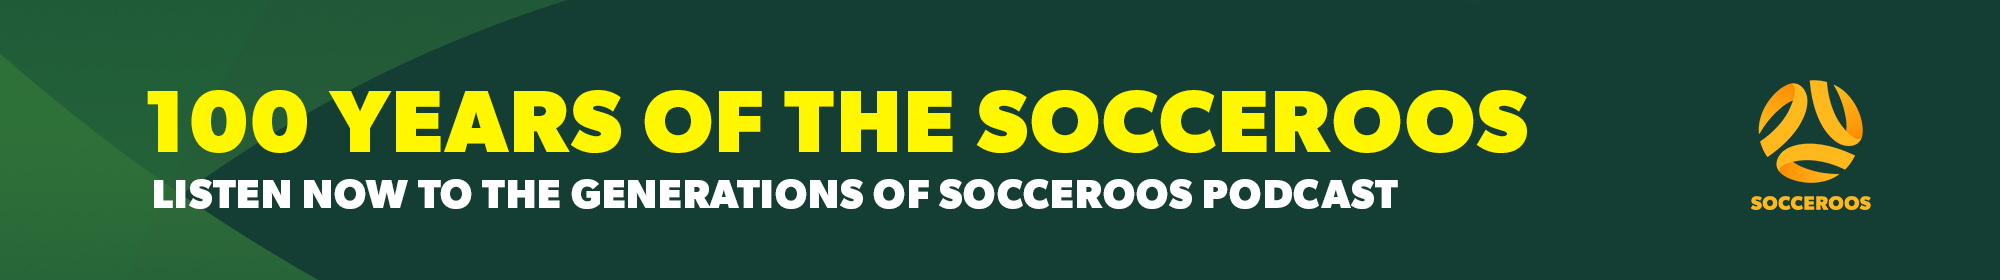 Banner delgado del podcast Generations of Socceroos